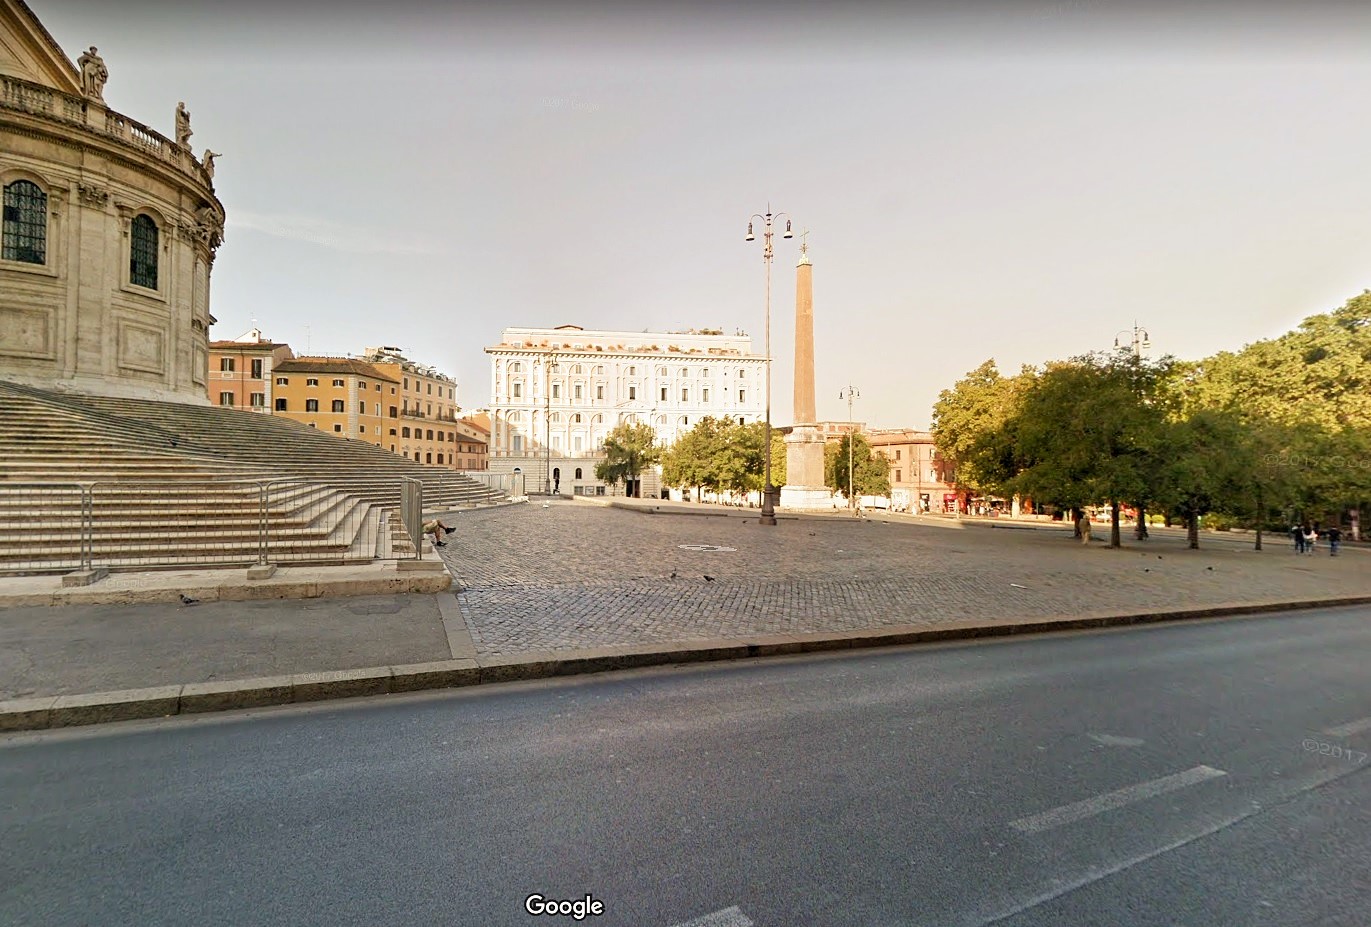 Площадь и обелиск Есквилино ( Piazza dell'Esquilino ) перед базиликой